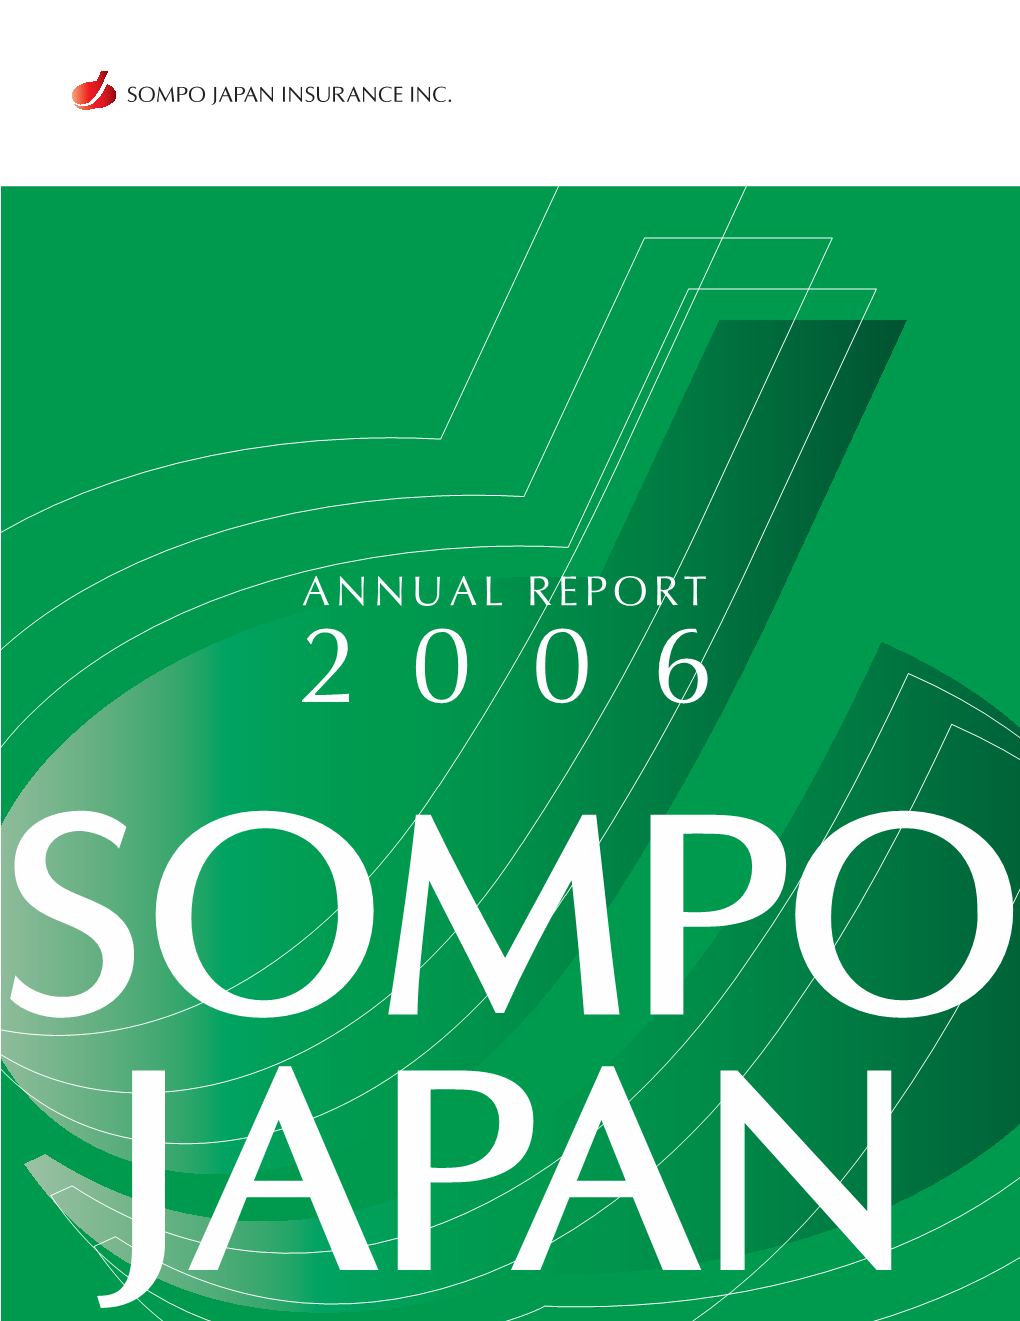 ANNUAL REPORT Sompo Japan Insurance Inc